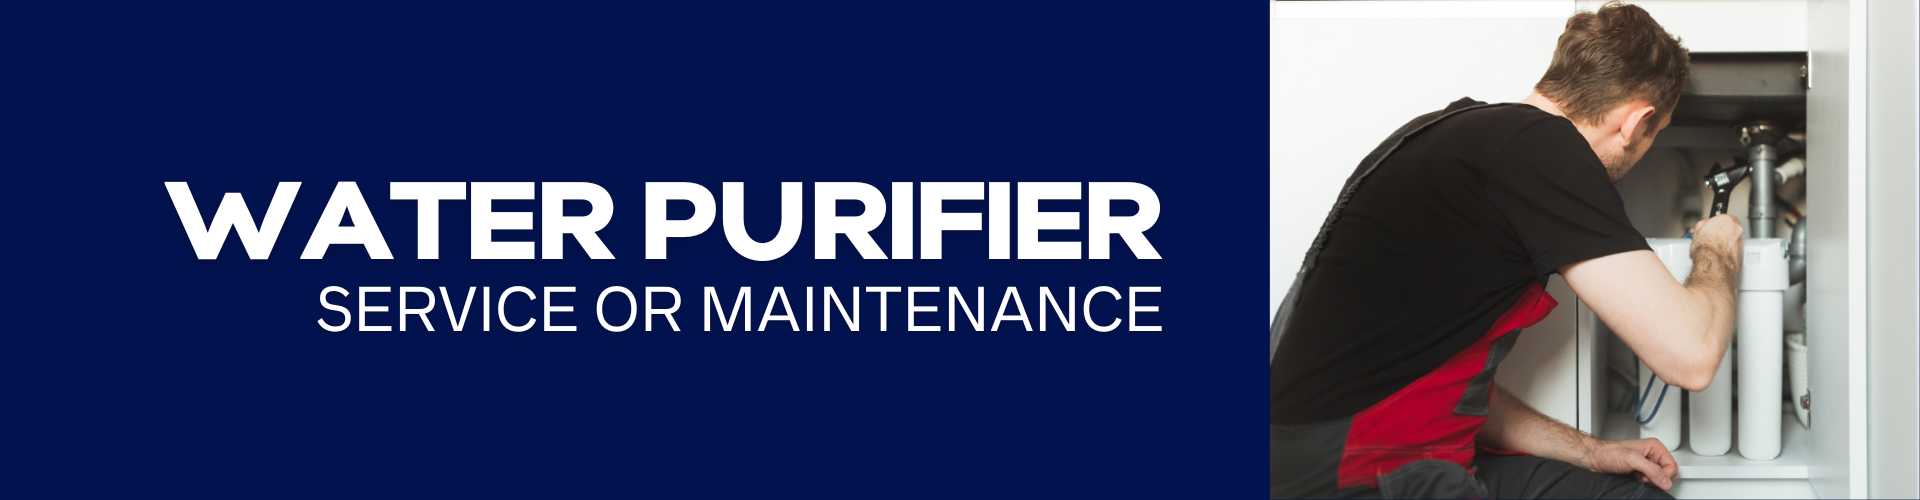 Water Purifier Service and Maintenance